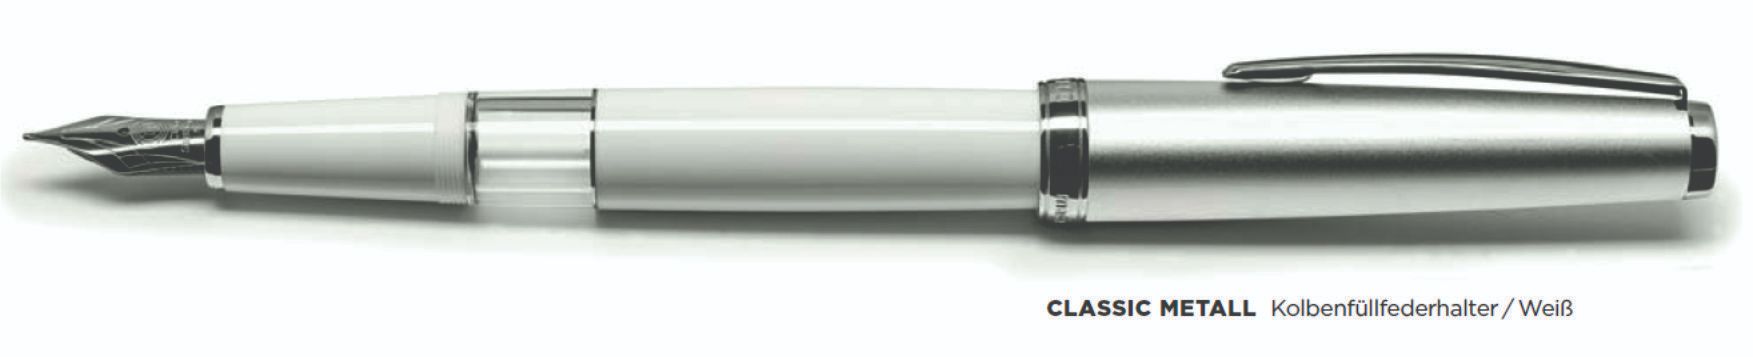 Cleo Pens CLASSIC Metal KolbenFllfederhalter Wei Fountain Pen